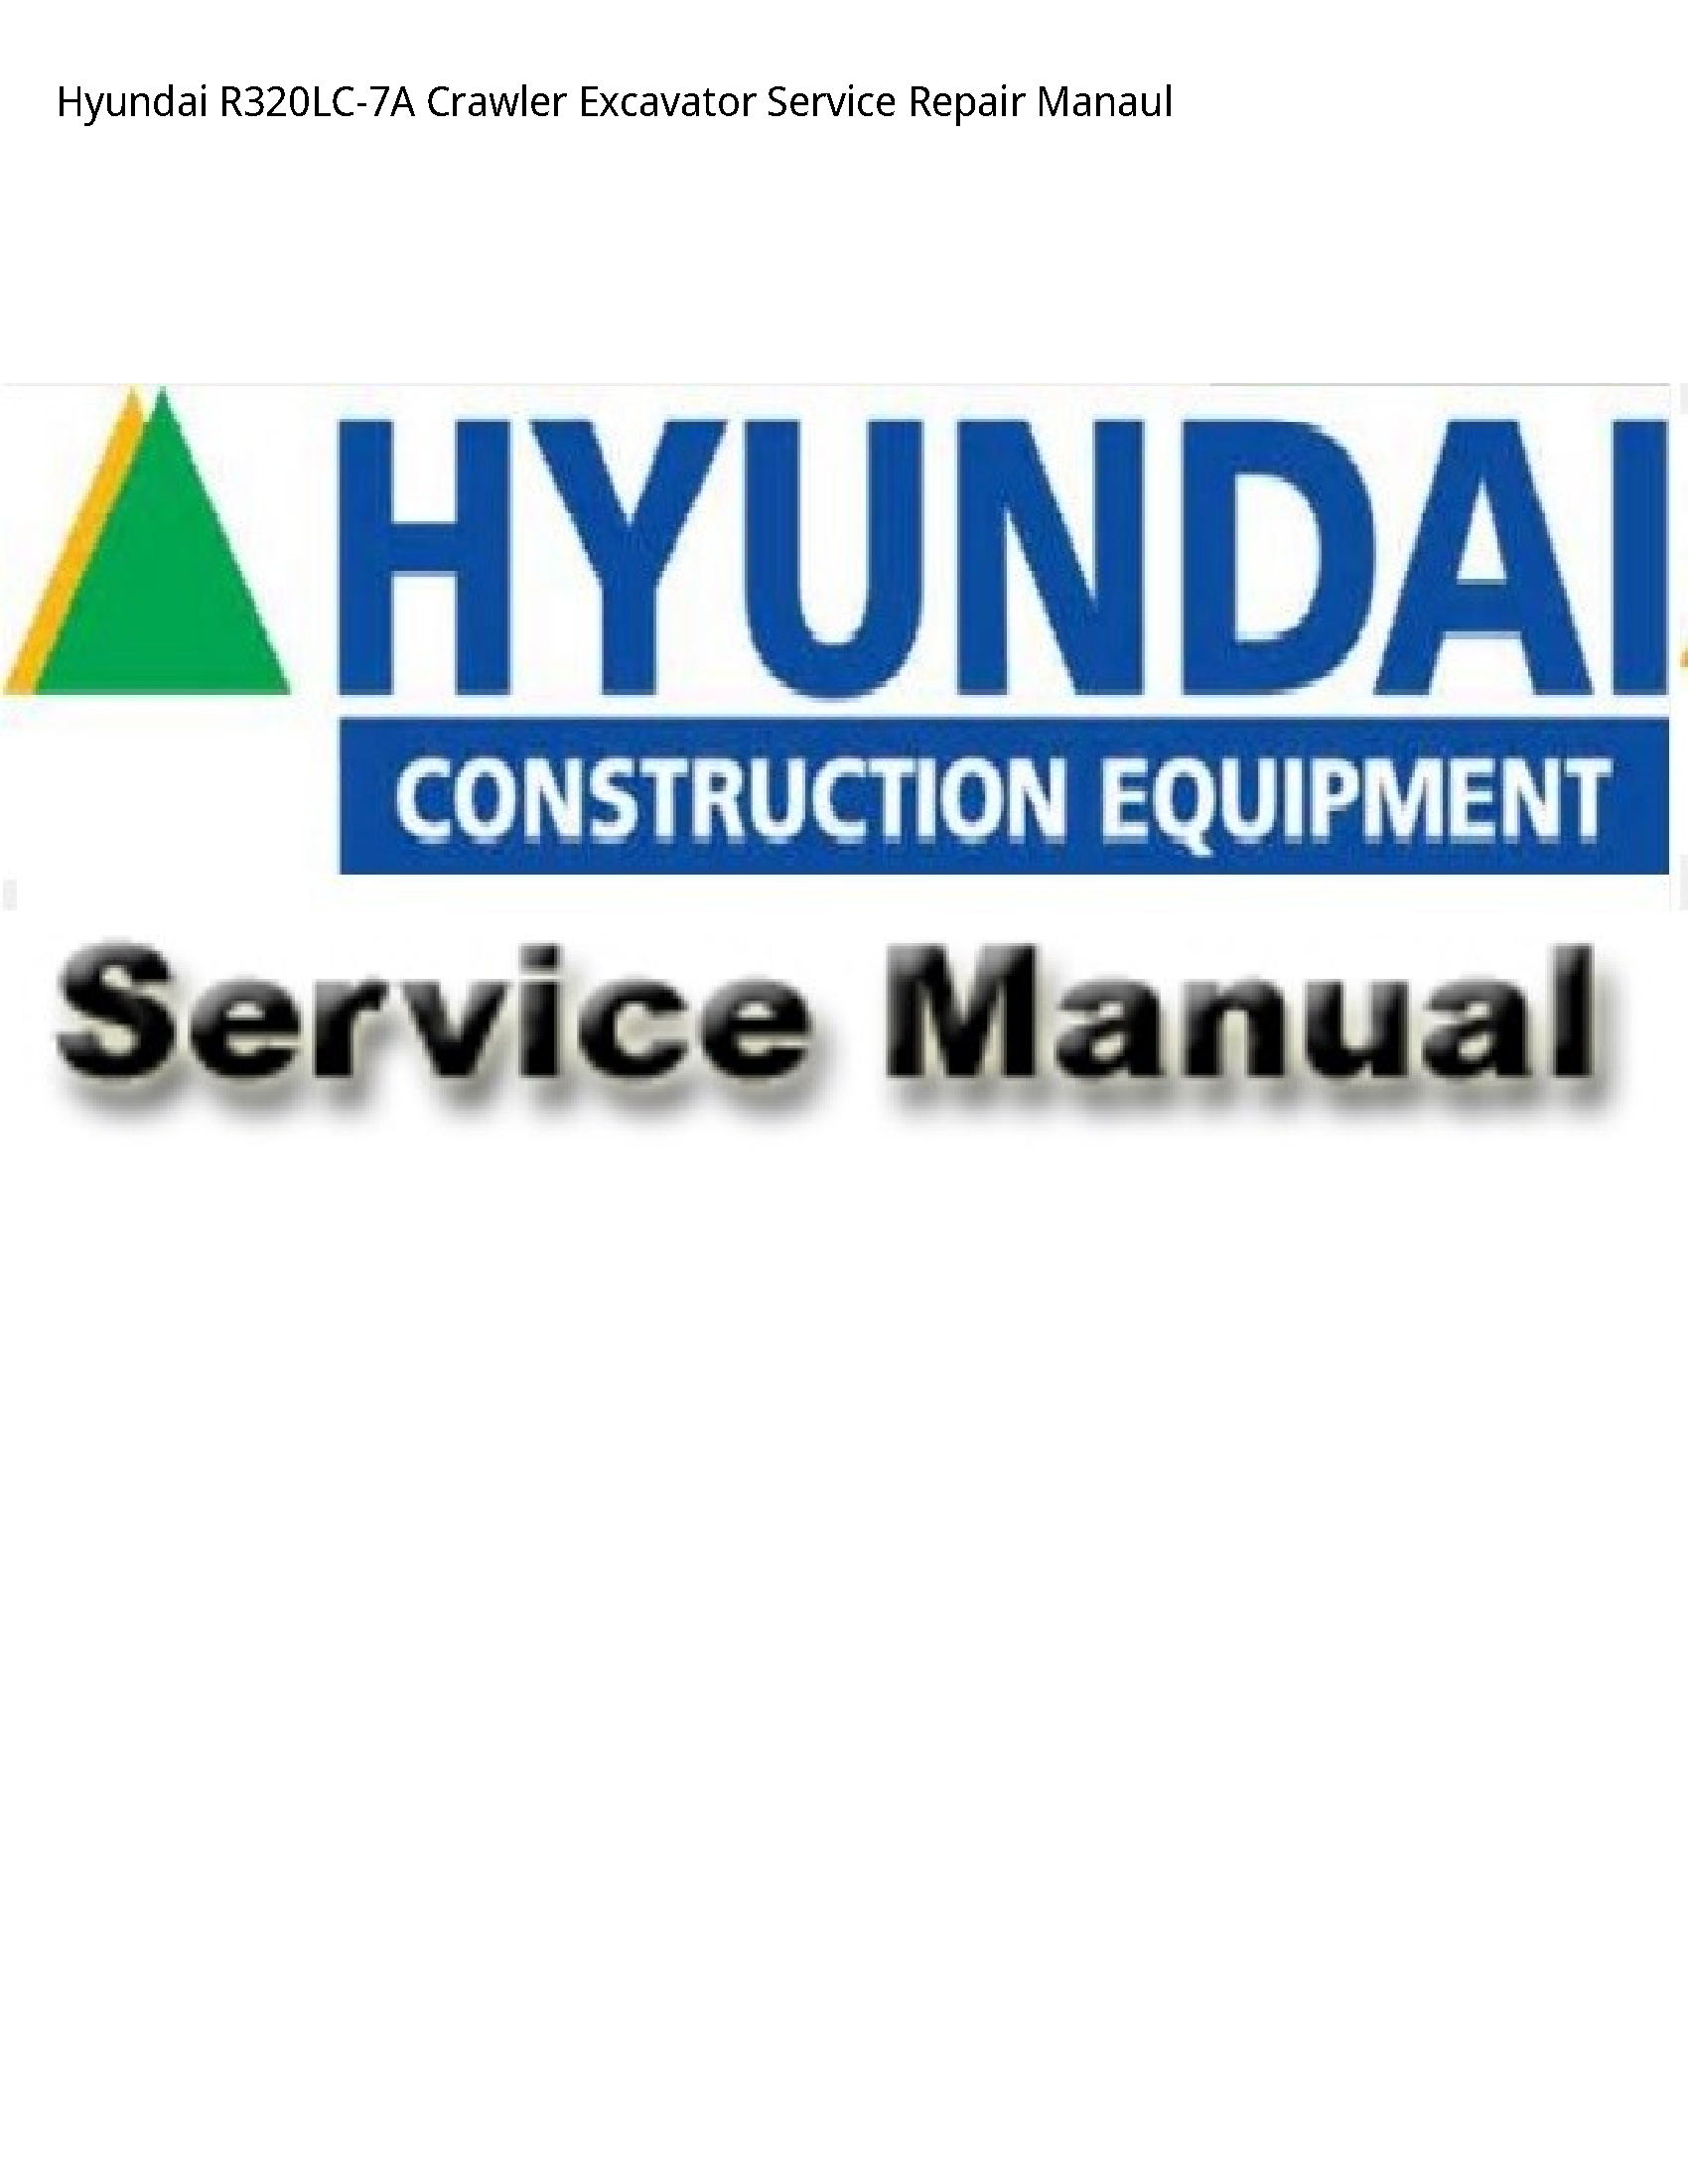 Hyundai R320LC-7A Crawler Excavator manual